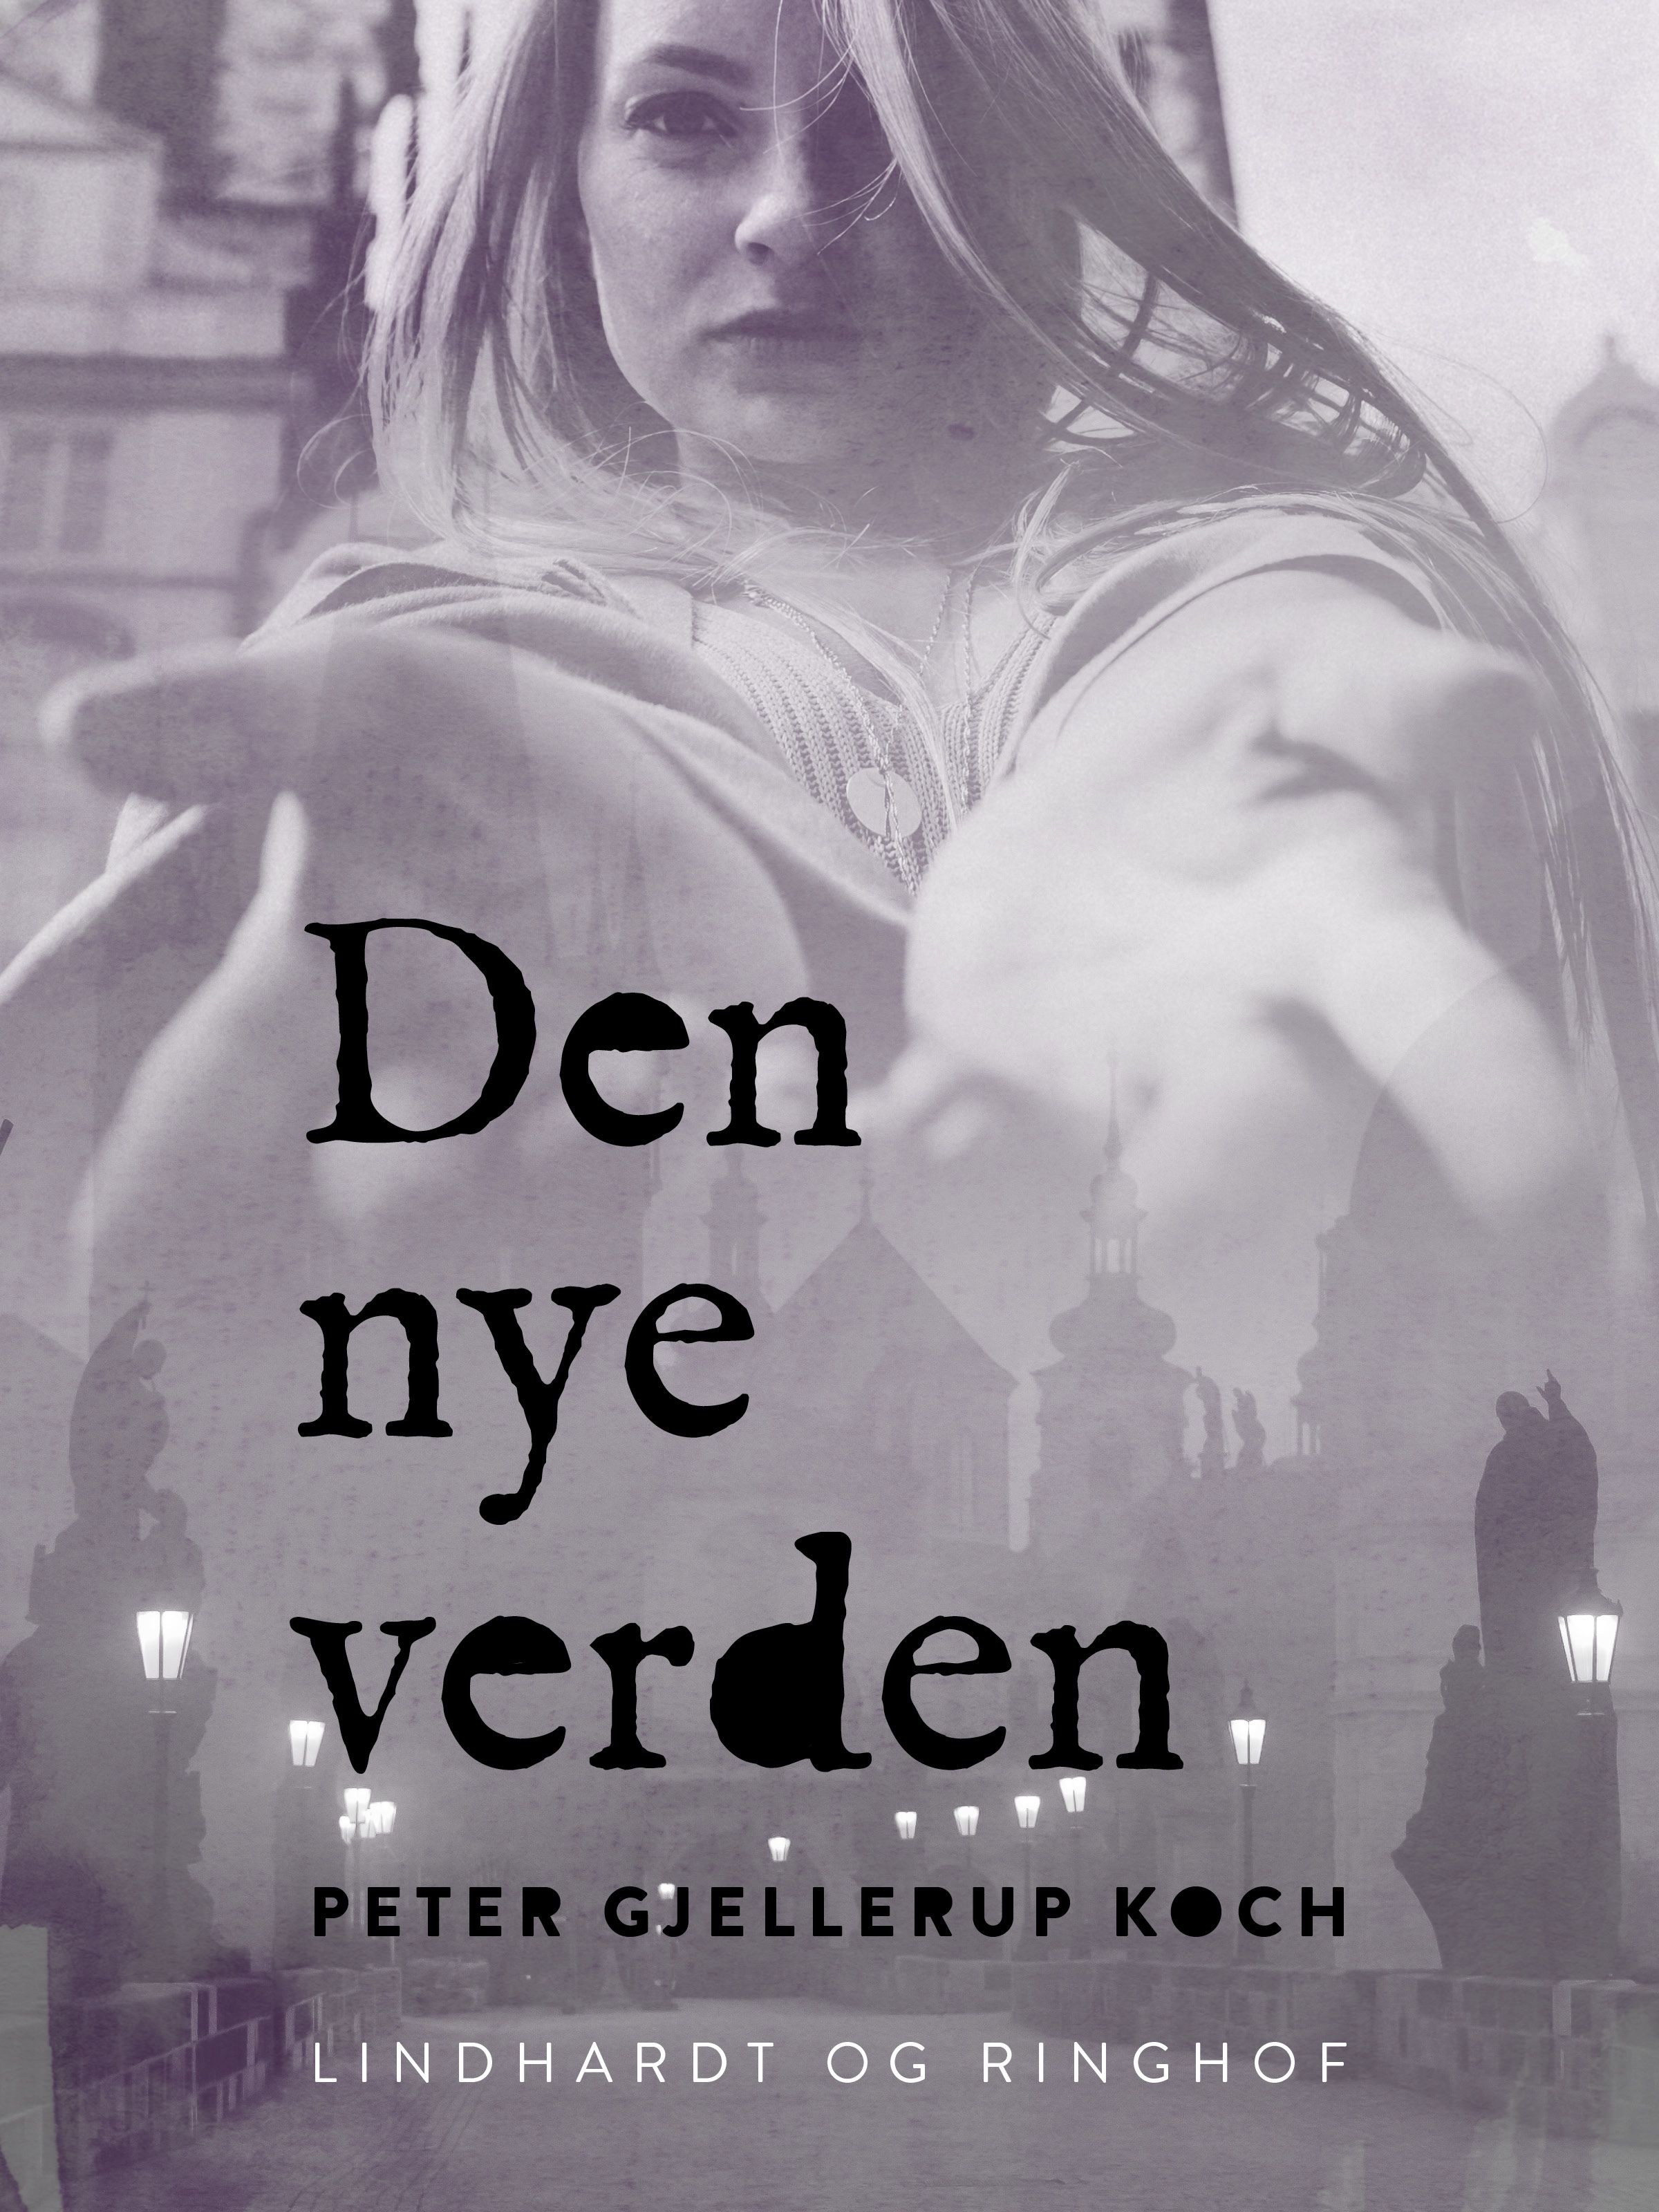 Den nye verden, e-bog af Peter Gjellerup Koch